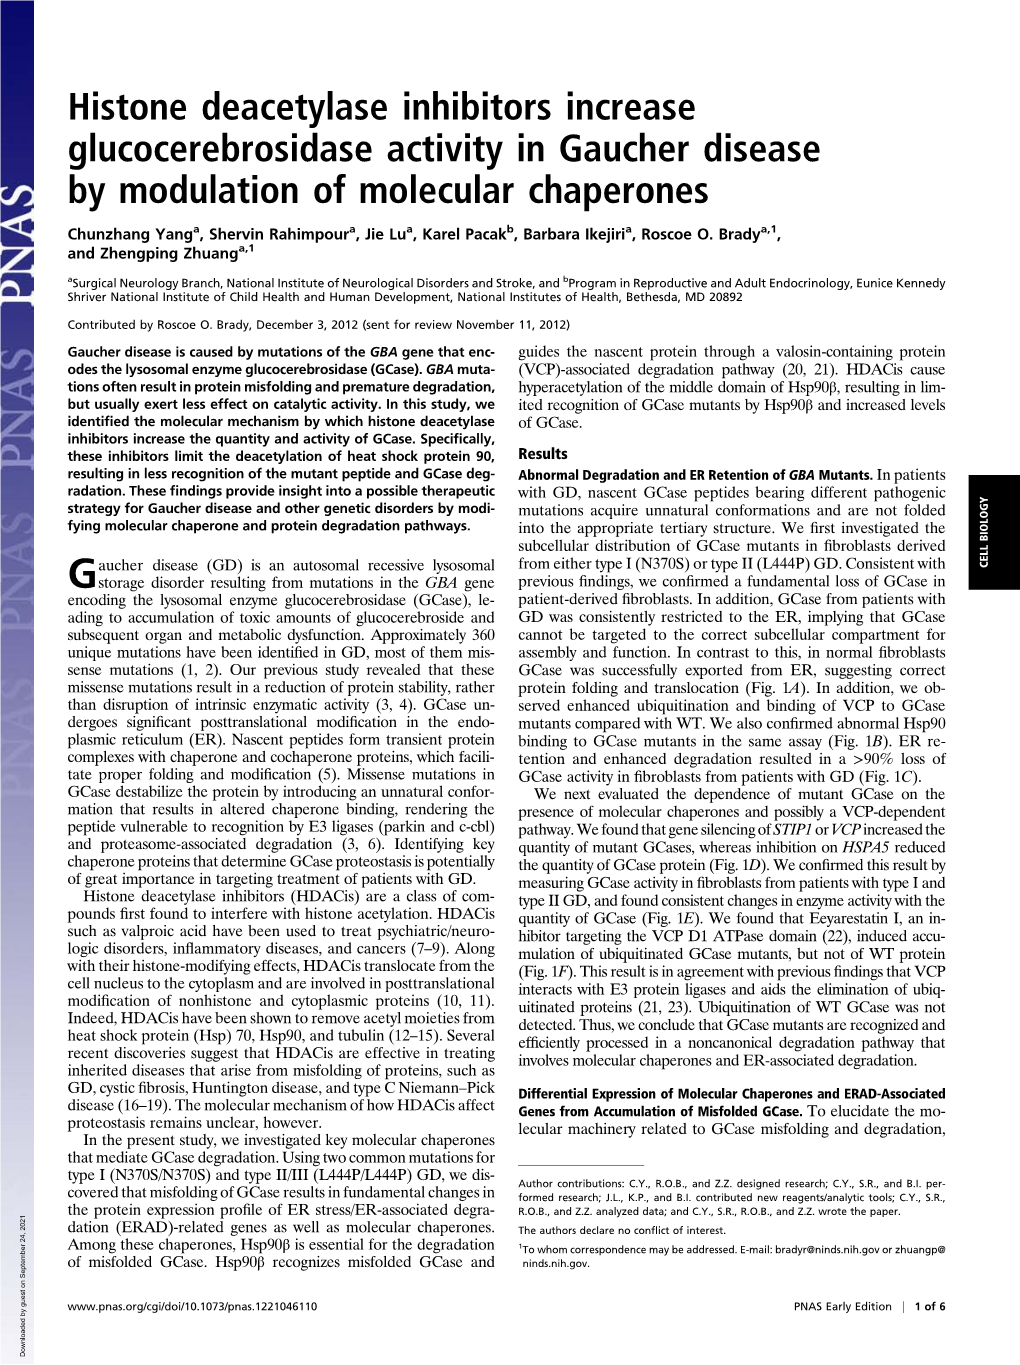 Histone Deacetylase Inhibitors Increase Glucocerebrosidase Activity in Gaucher Disease by Modulation of Molecular Chaperones